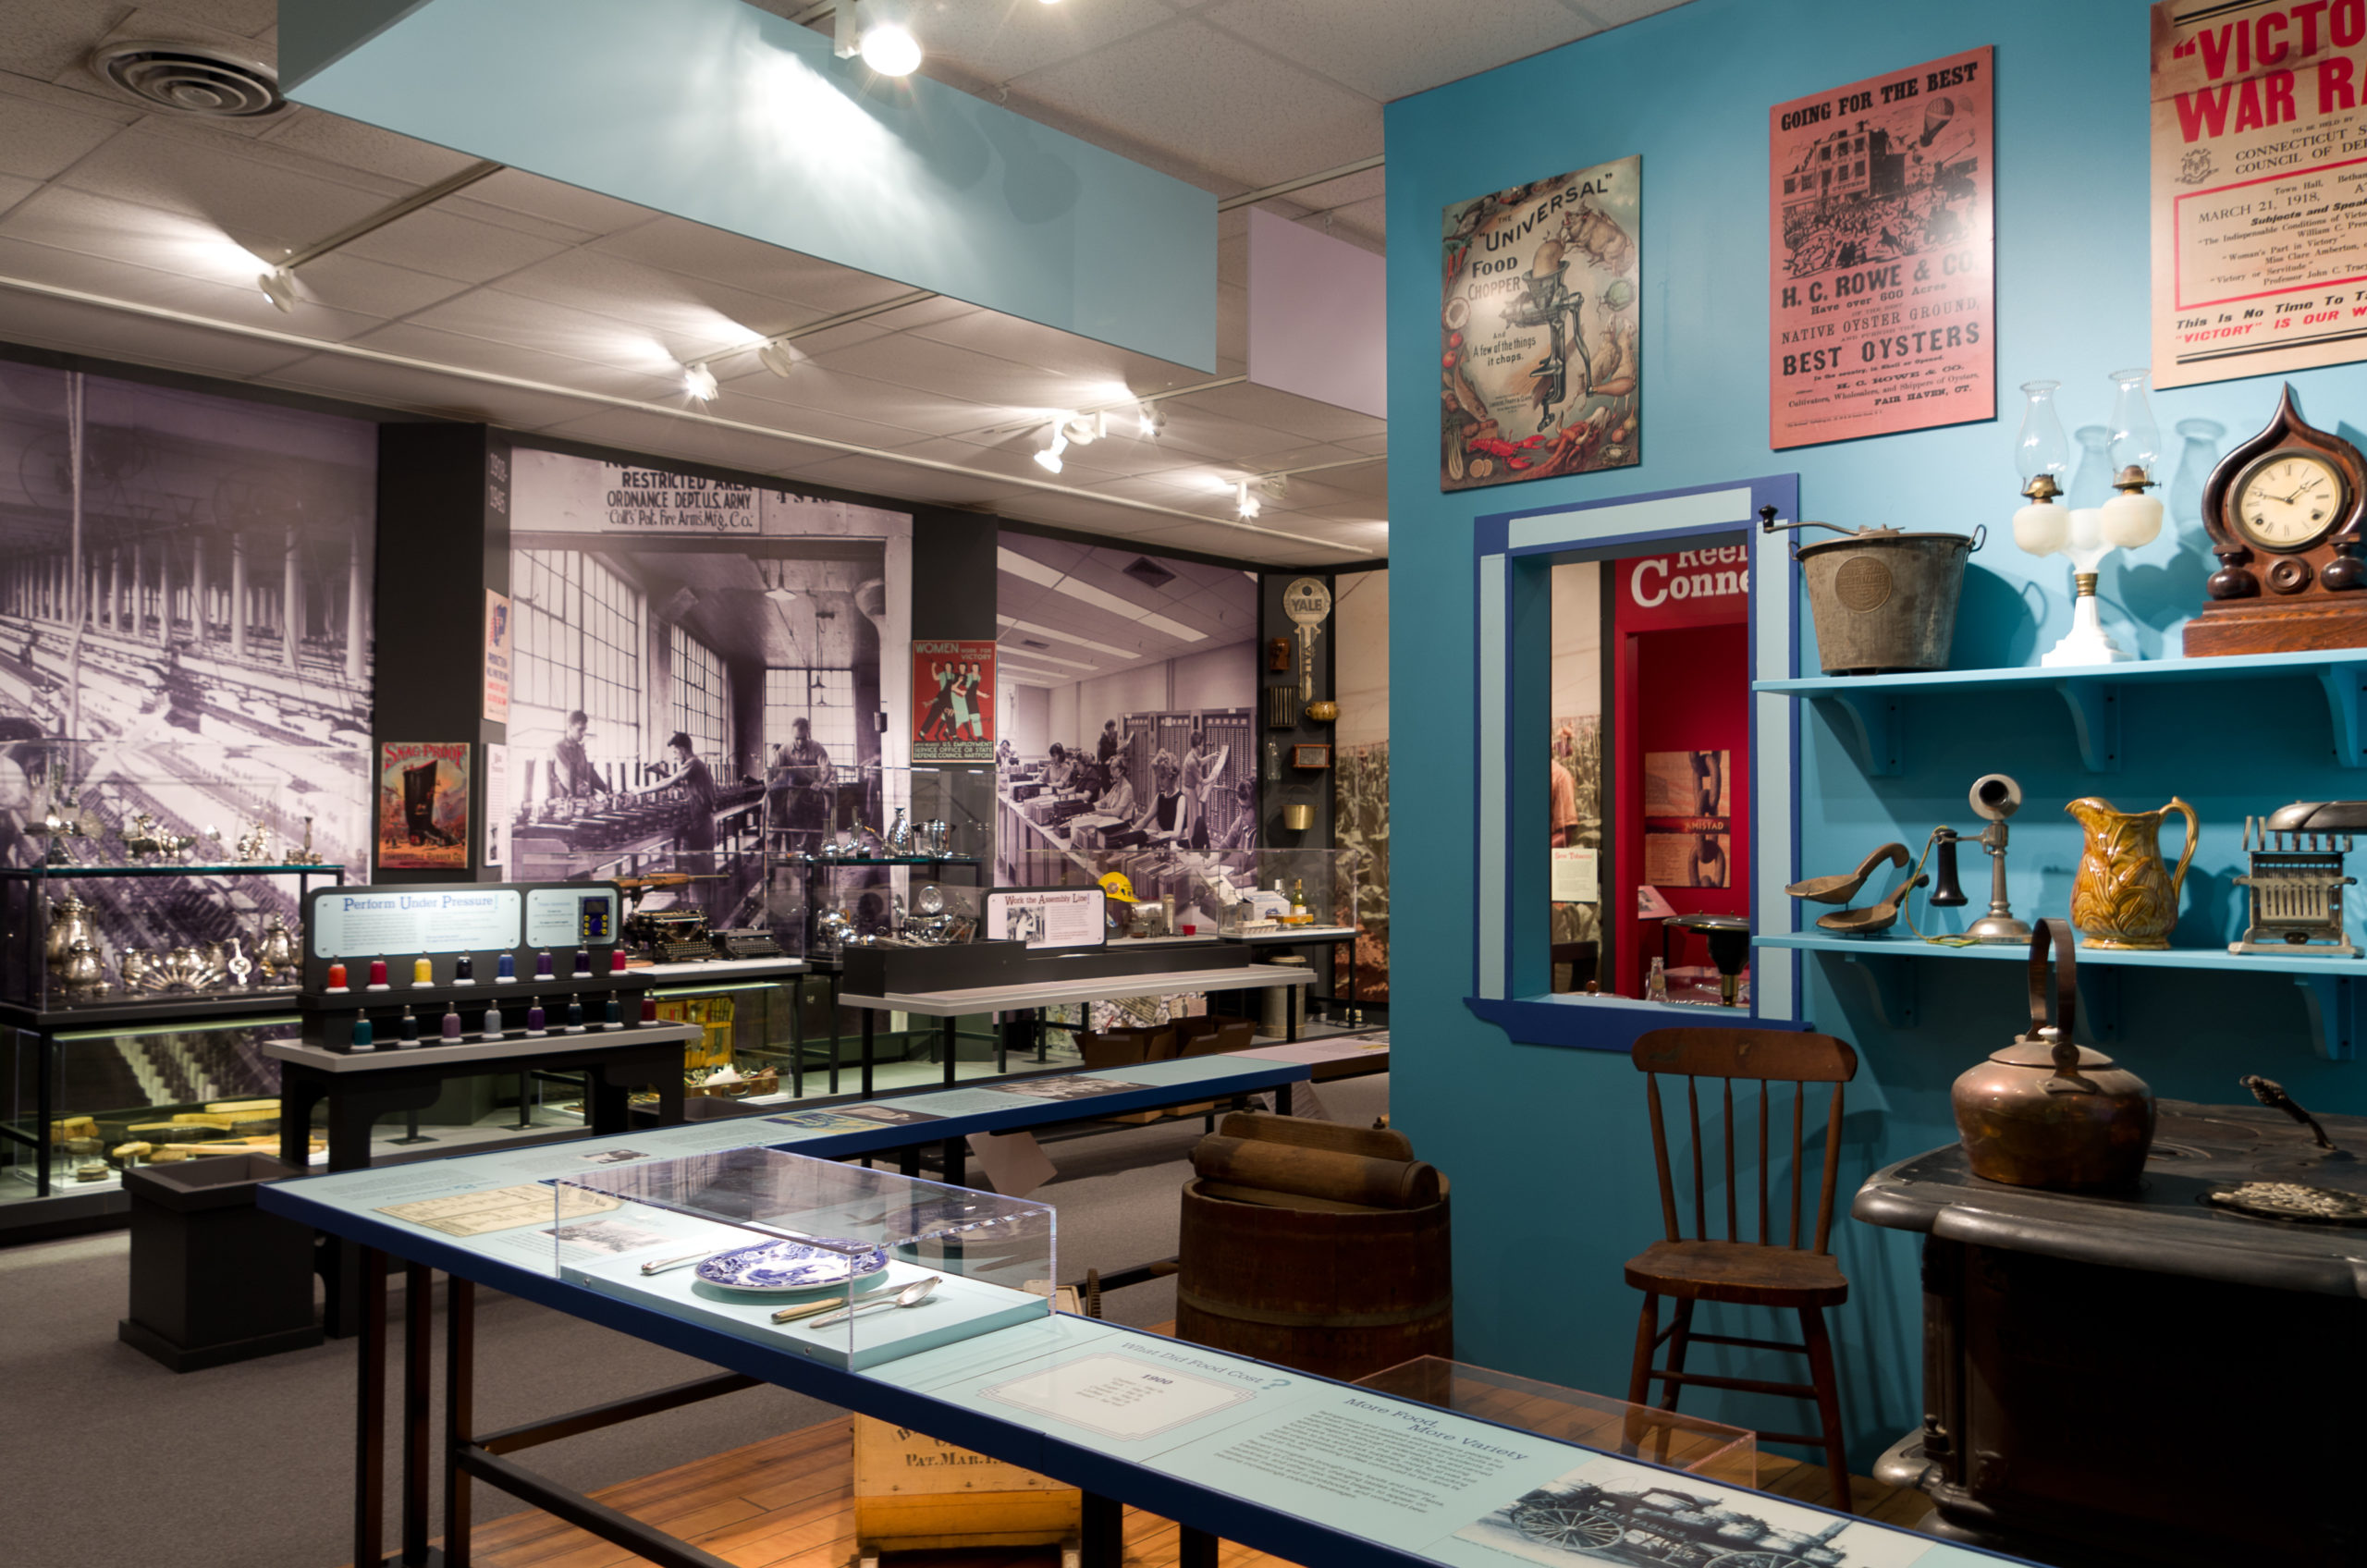 Making Connecticut Exhibit: View of 1865-1918 Kitchen